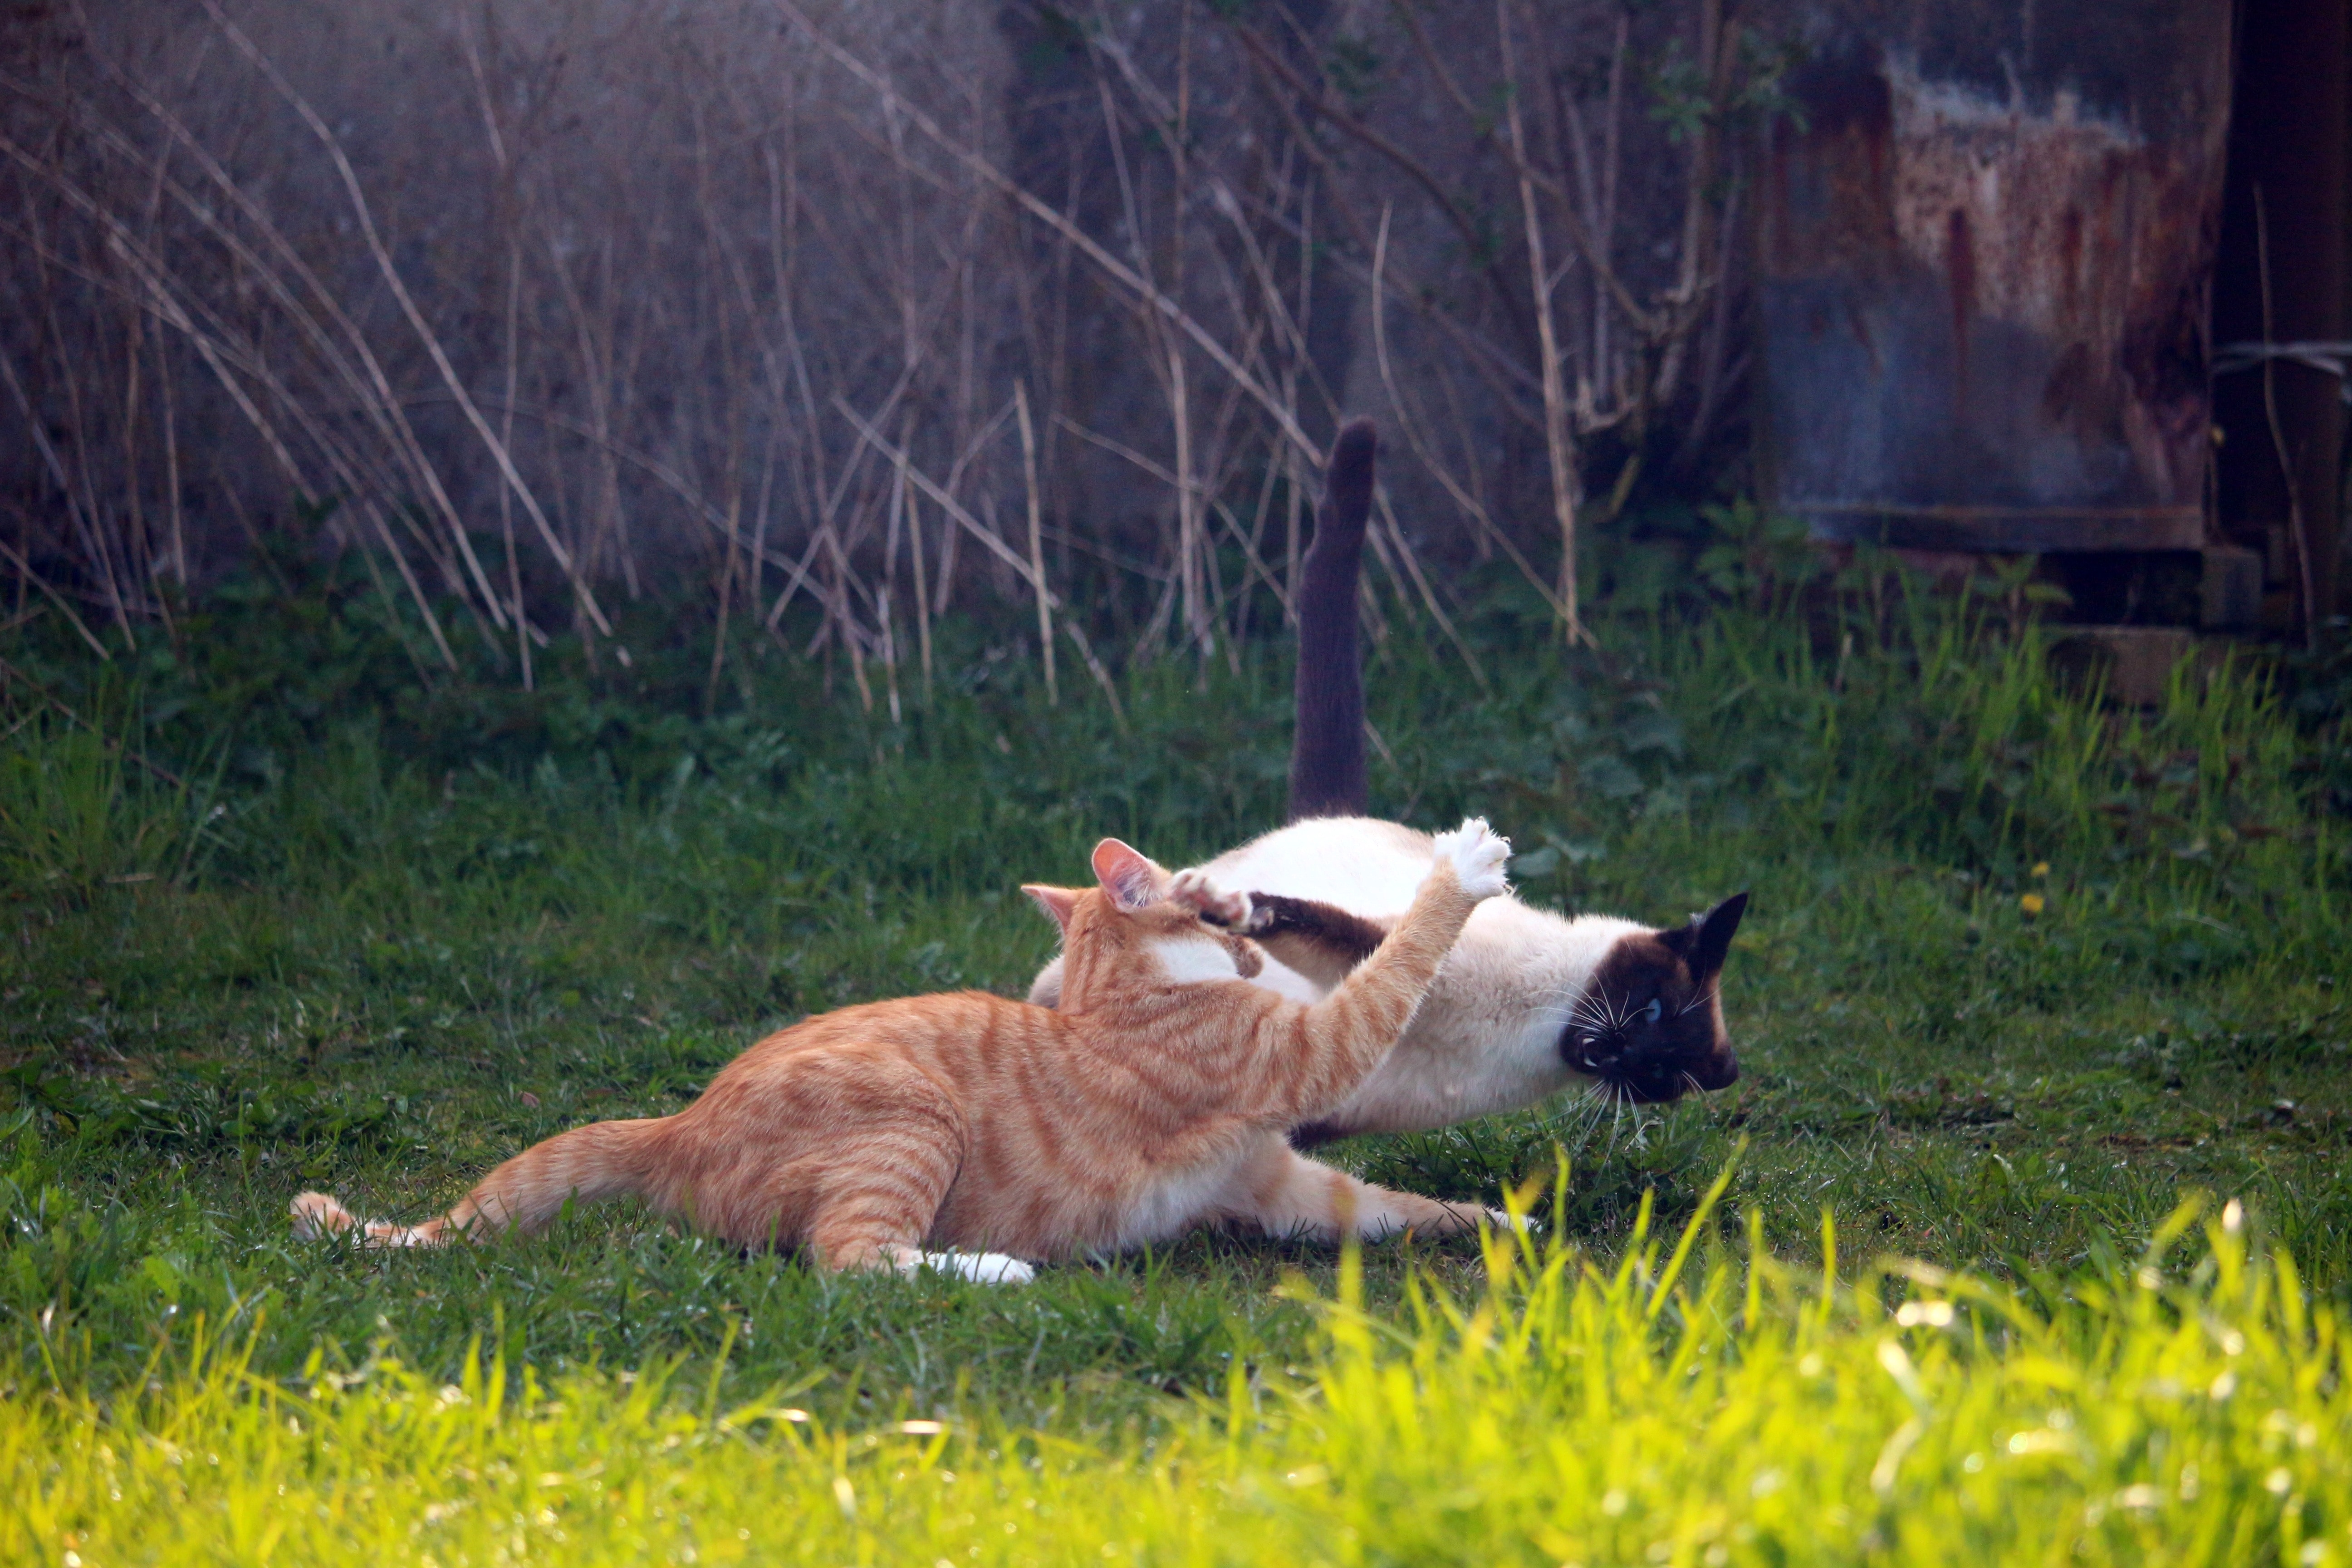 siamese and orange tabby cat